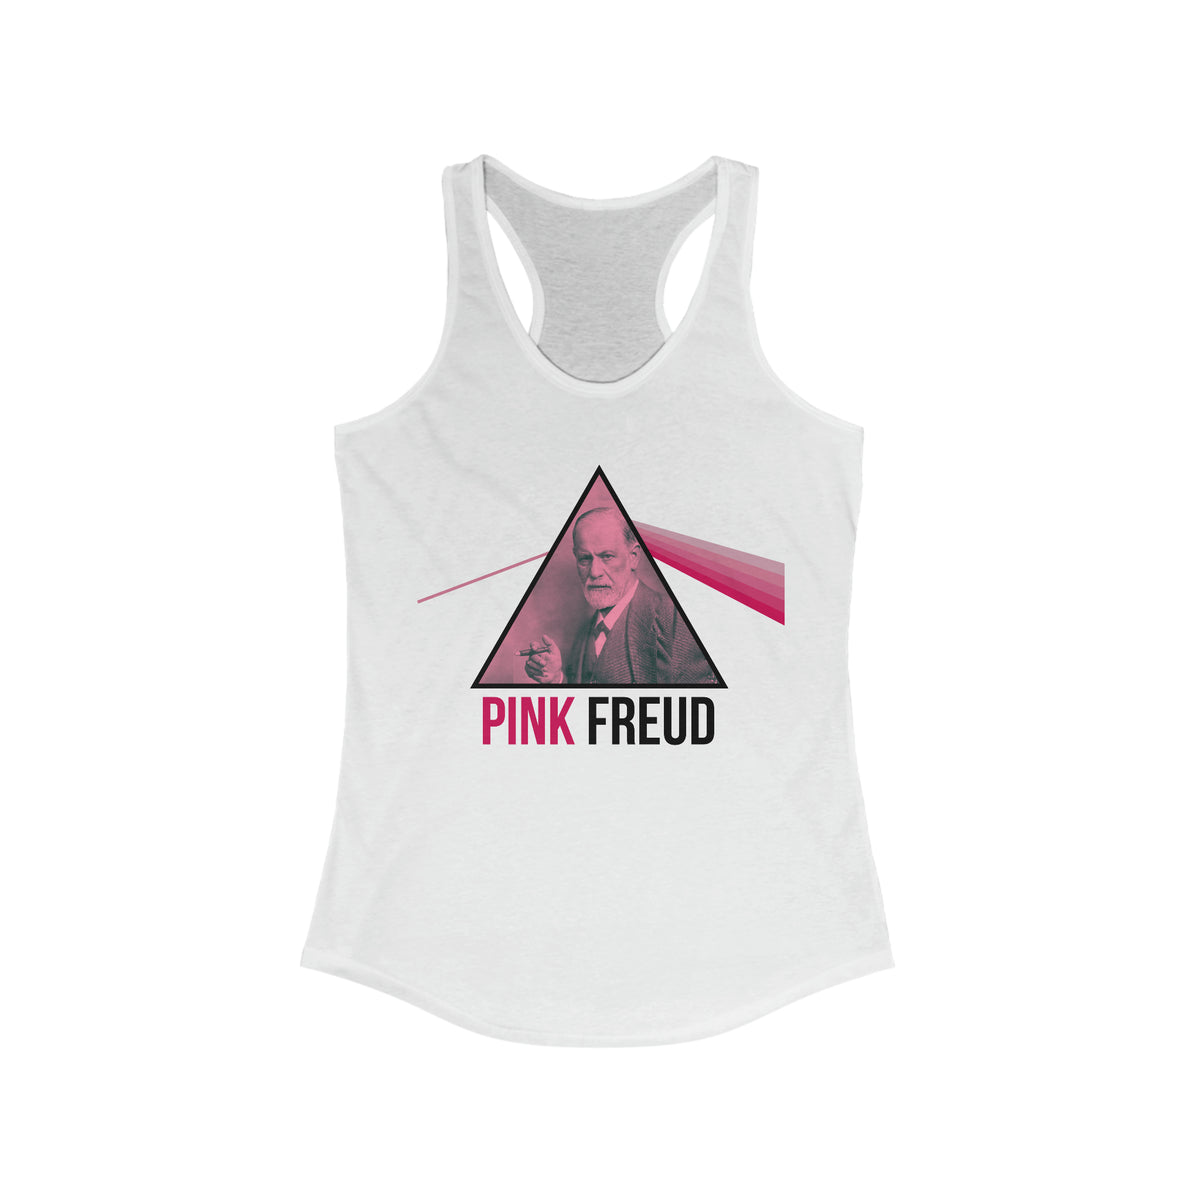 Pink Freud School Psychologist Counselor Shirt | Psychology Gift  | Women's Slim-fit Racerback Tank Top